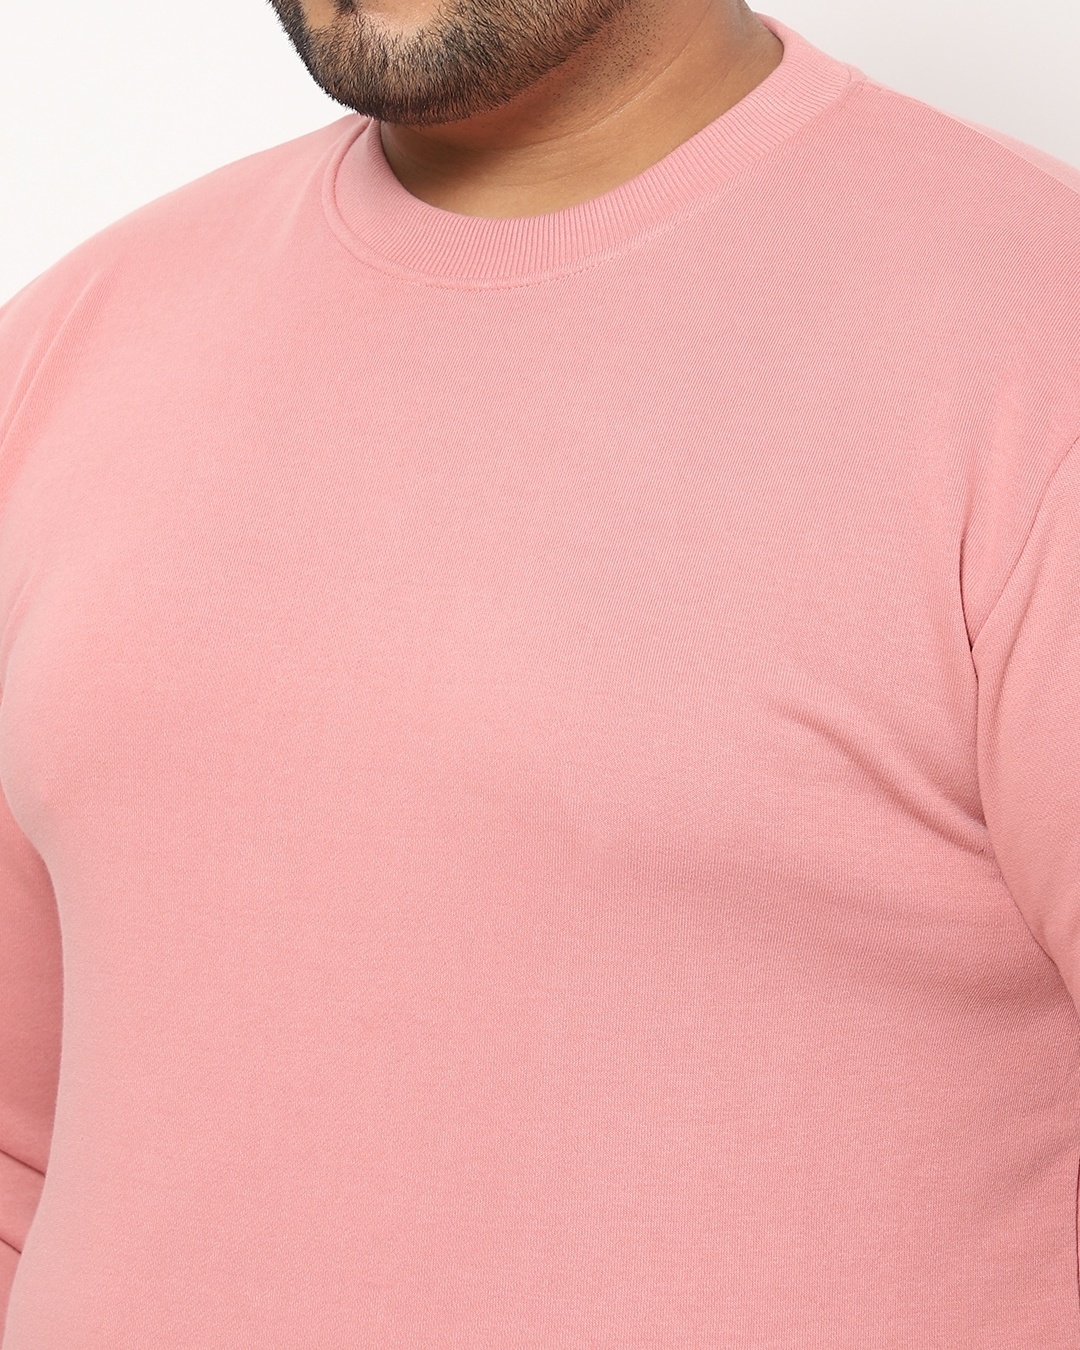 Shop BRIDAL ROSE Plus Size Crewneck Sweatshirt